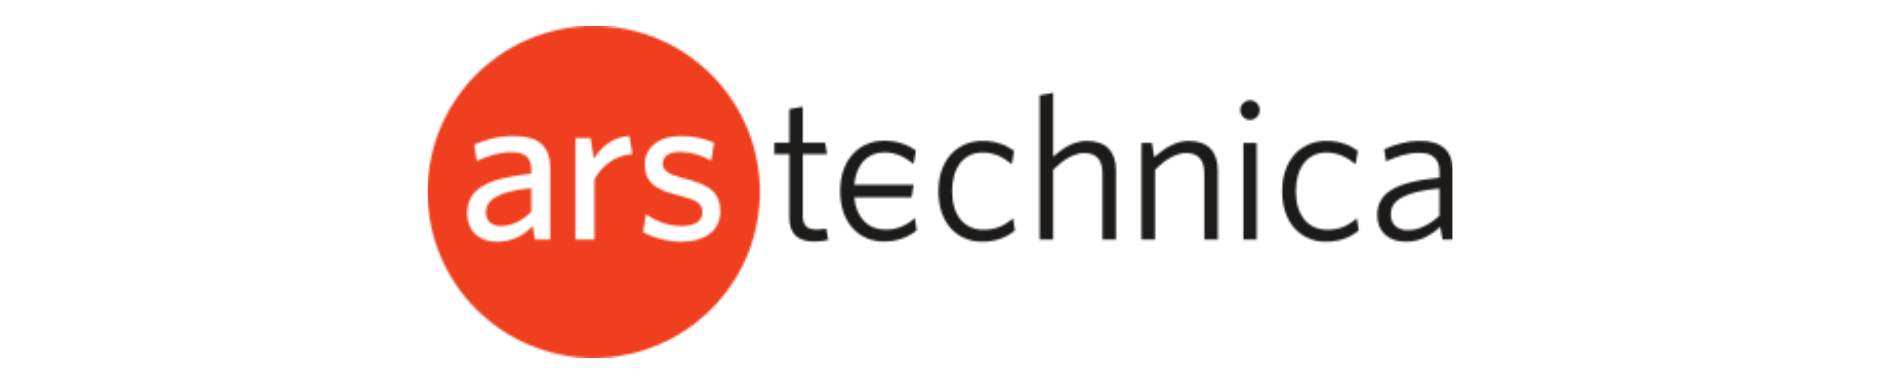 ArsTechnica-logo